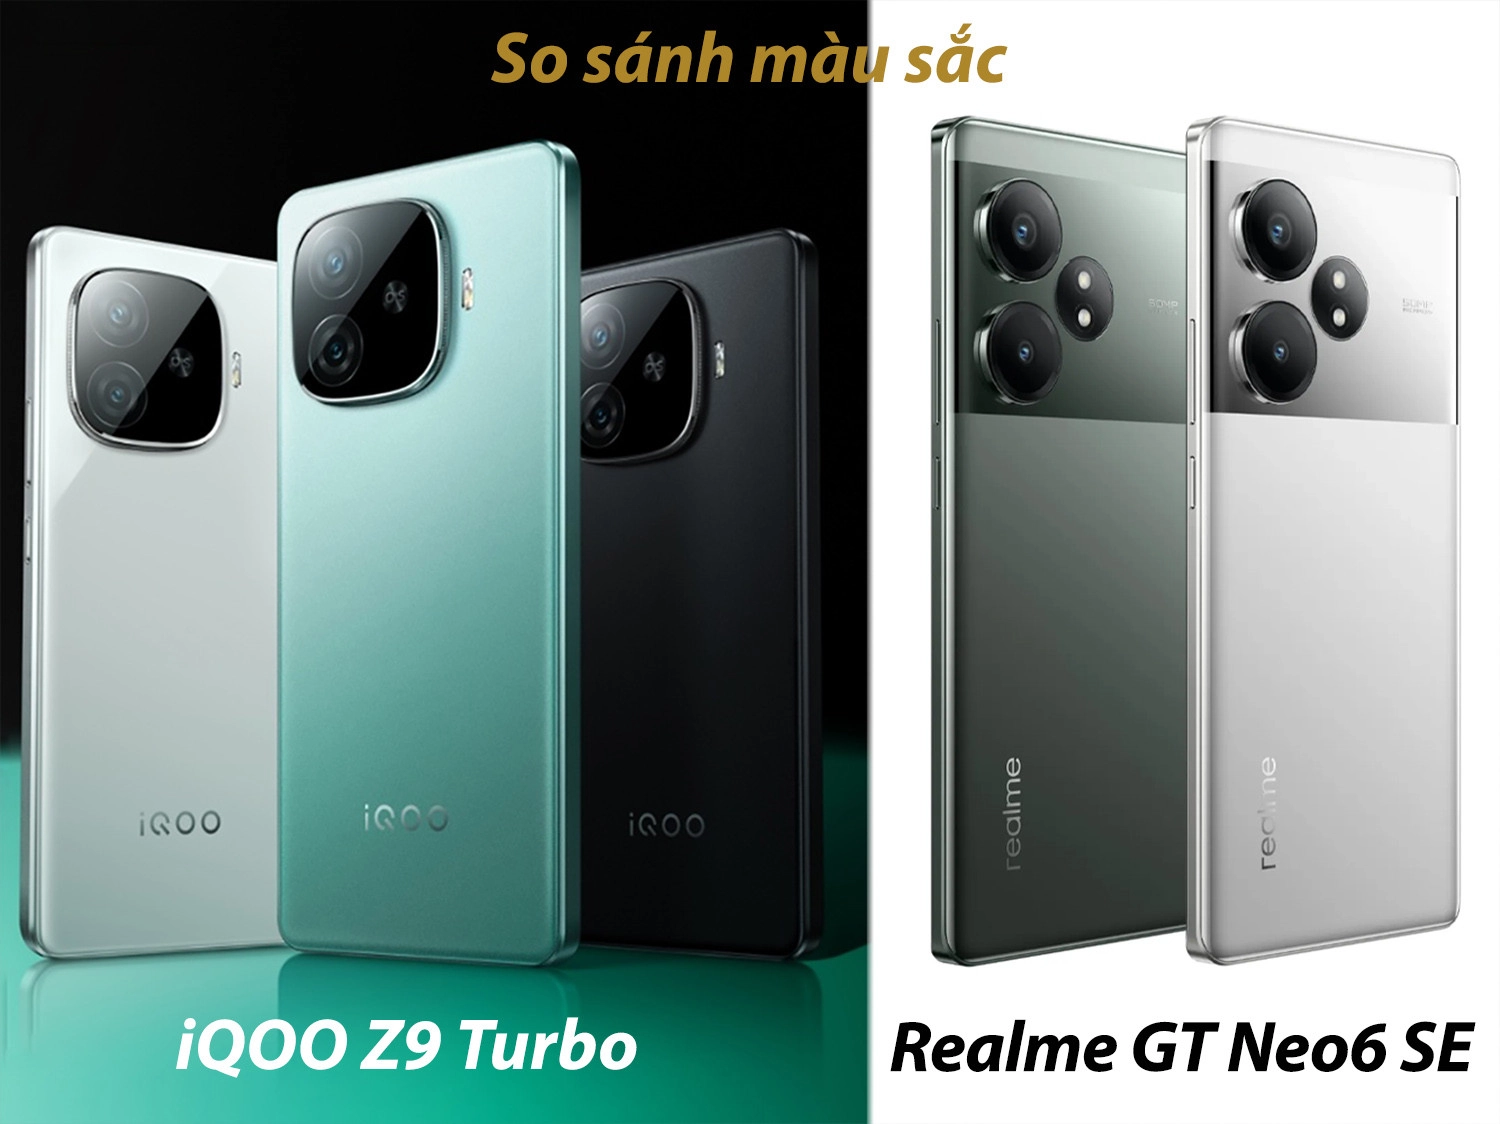 So sánh màu sắc Vivo iQOO Z9 Turbo và Realme GT Neo 6 SE